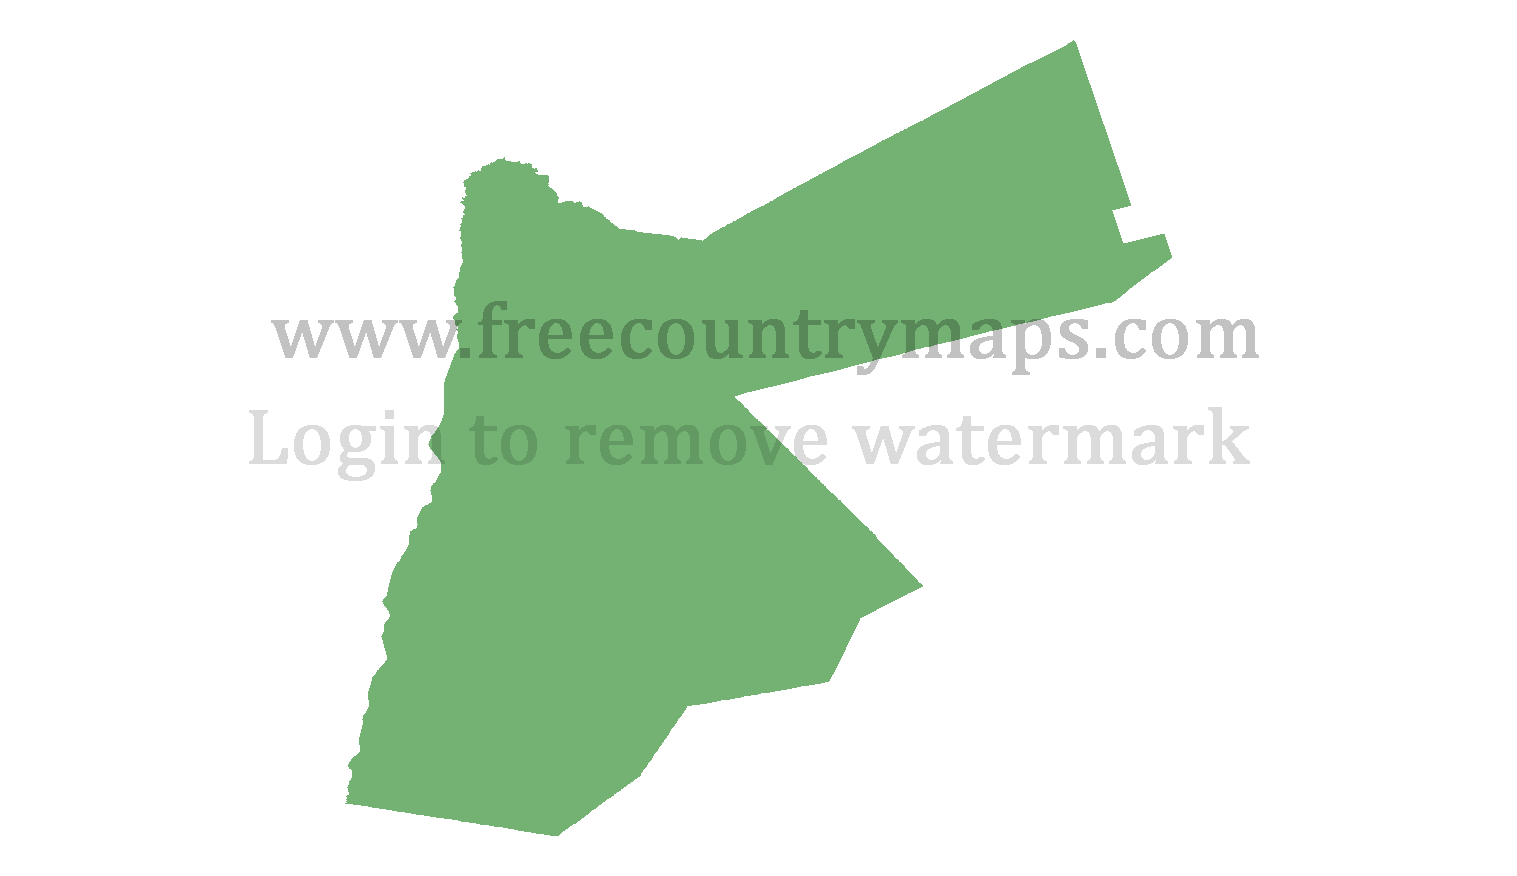 Blank Map of Jordan